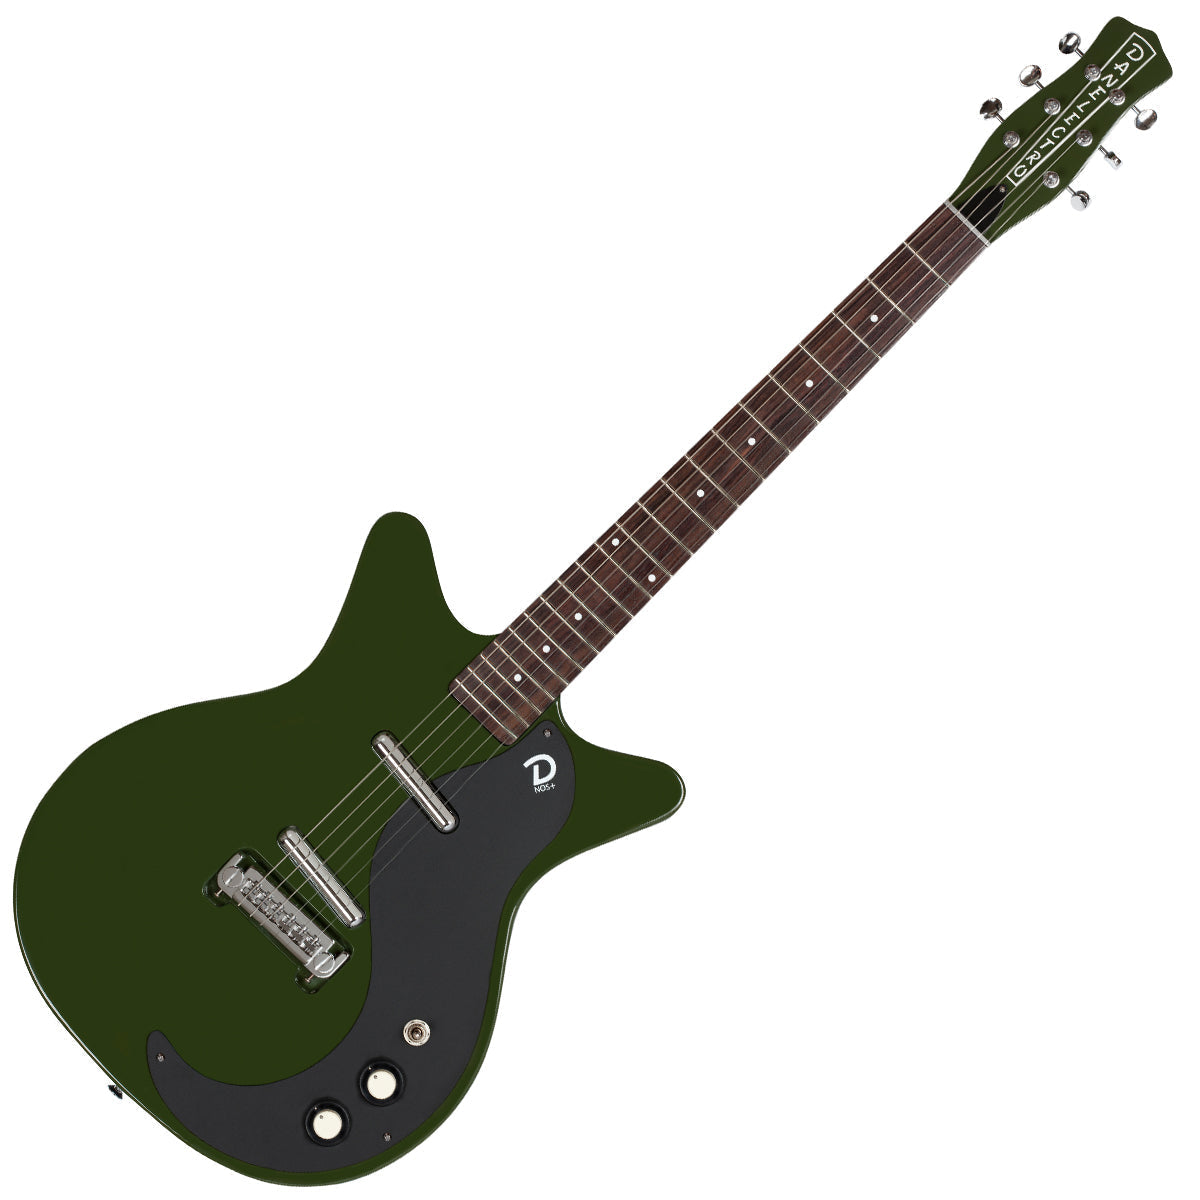 Danelectro Blackout '59M NOS+ Electric Guitar ~ Green Envy, Electric Guitar for sale at Richards Guitars.